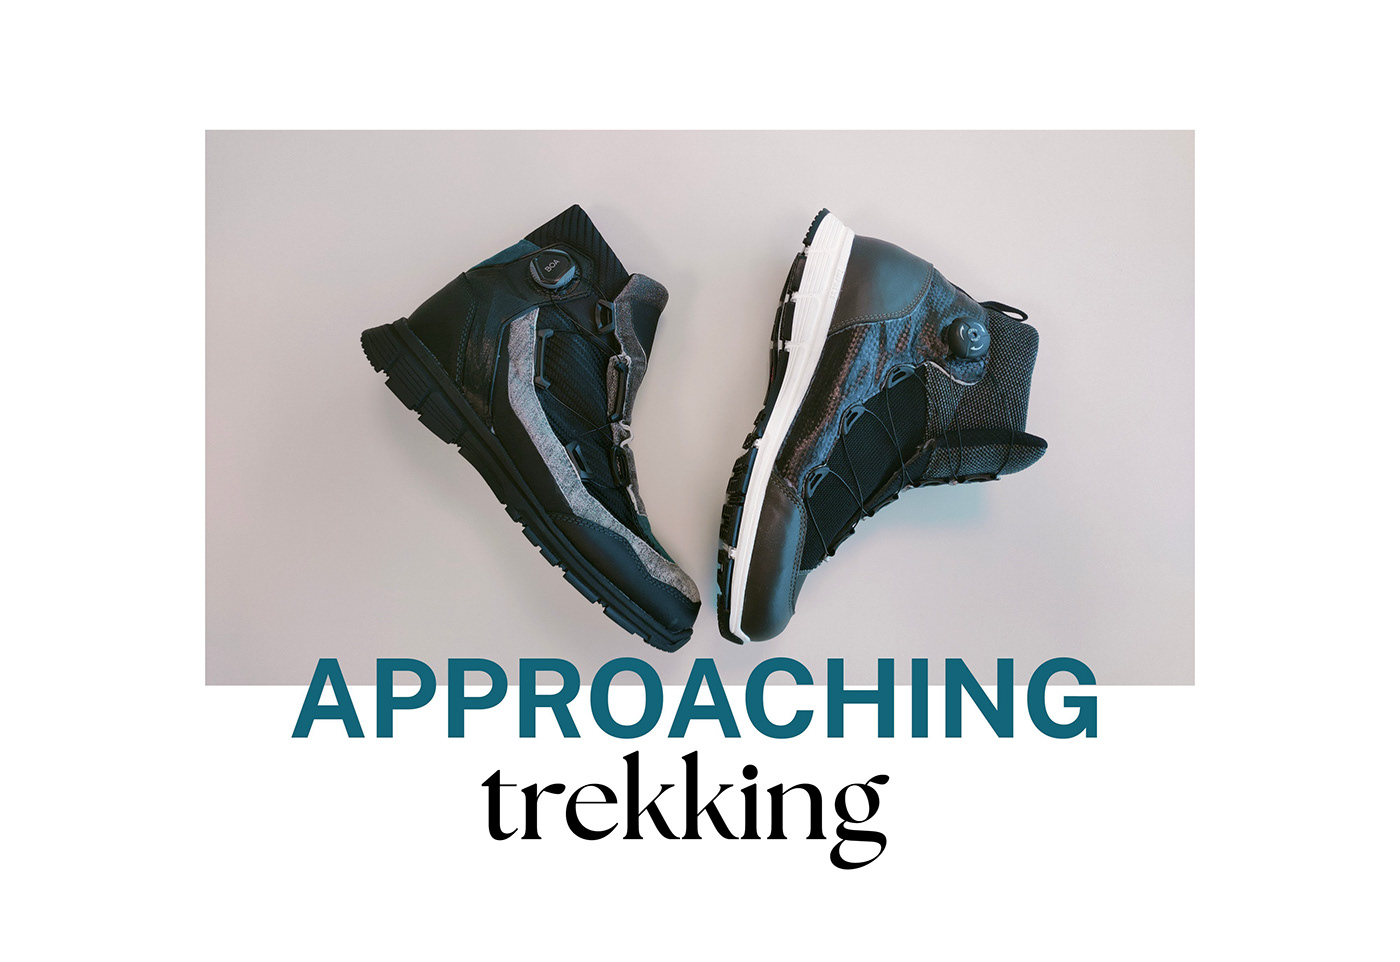 trekking footwear footwear design 3D 3d modeling 3d printing product design  product development prototype pattern making